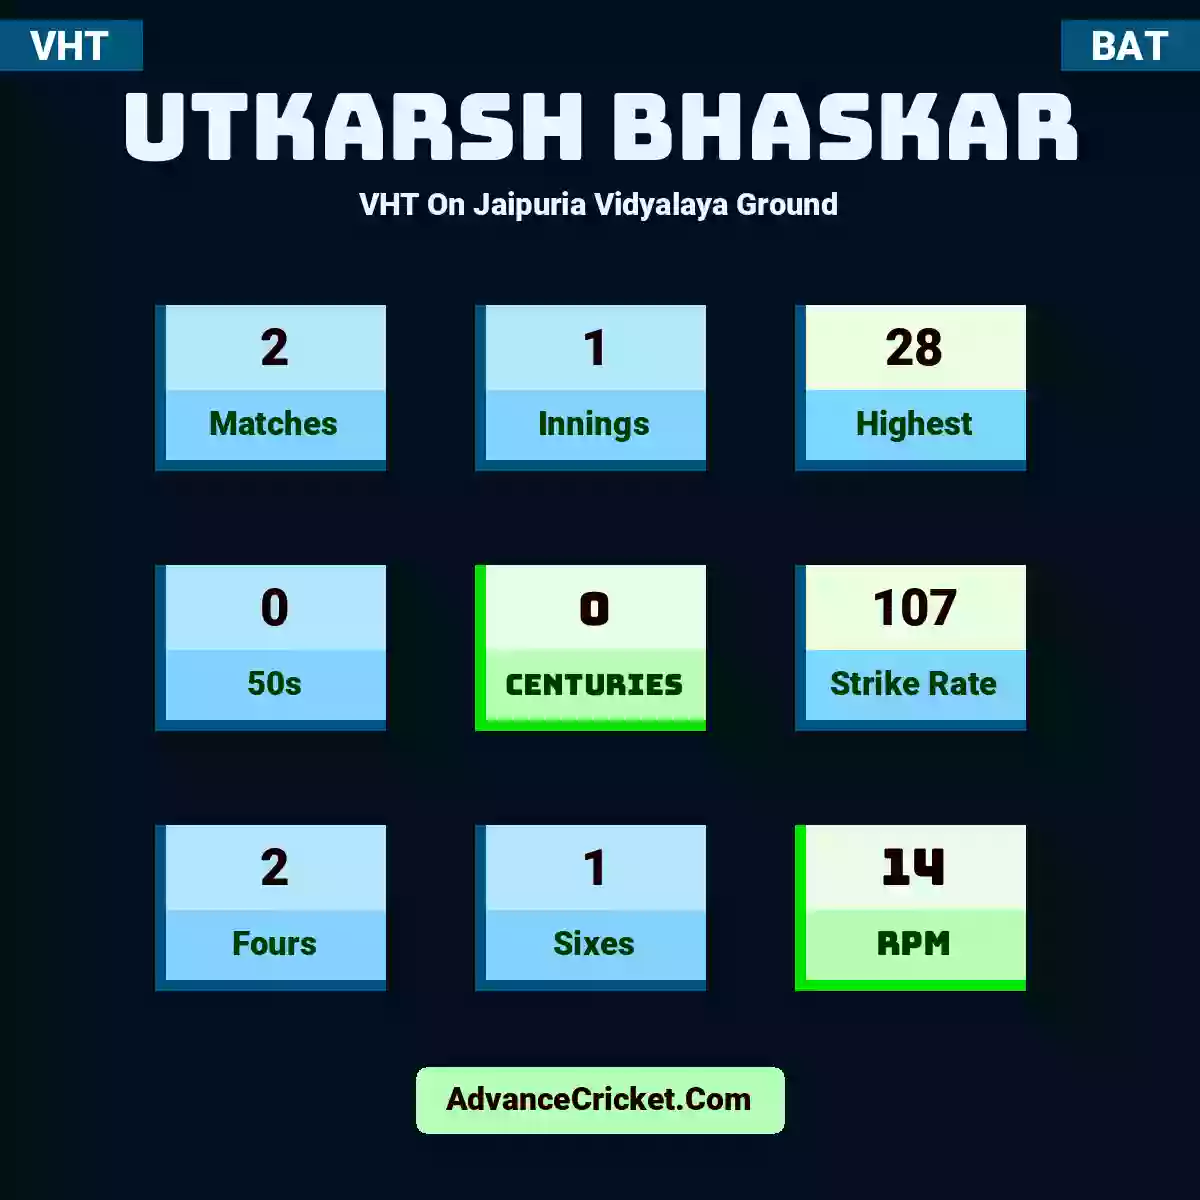 Utkarsh Bhaskar VHT  On Jaipuria Vidyalaya Ground, Utkarsh Bhaskar played 2 matches, scored 28 runs as highest, 0 half-centuries, and 0 centuries, with a strike rate of 107. U.Bhaskar hit 2 fours and 1 sixes, with an RPM of 14.